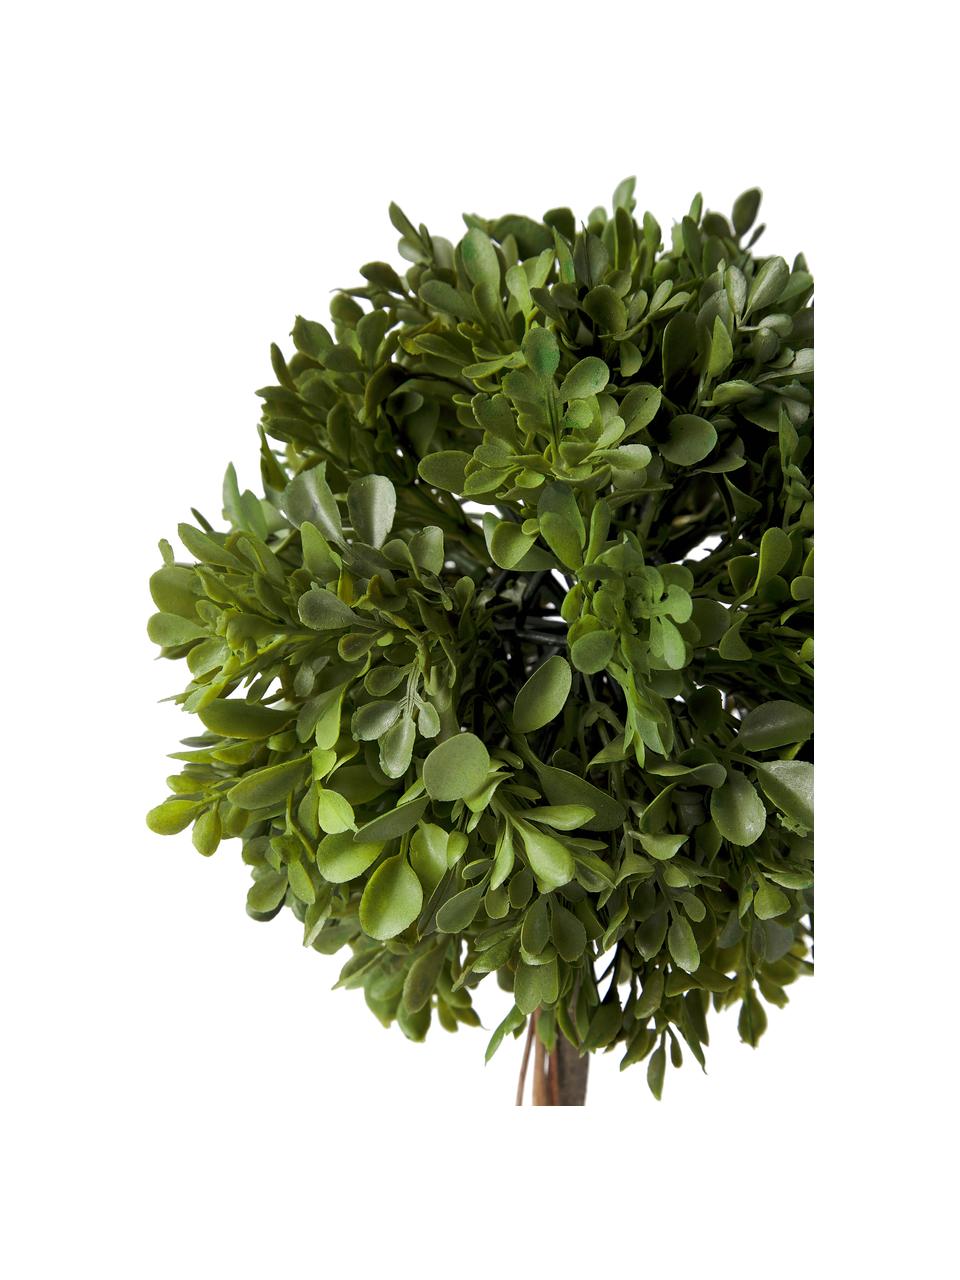 Handgemaakte kunstboom Moni, Pot: rotan, Groen, bruin, Ø 20 x H 43 cm